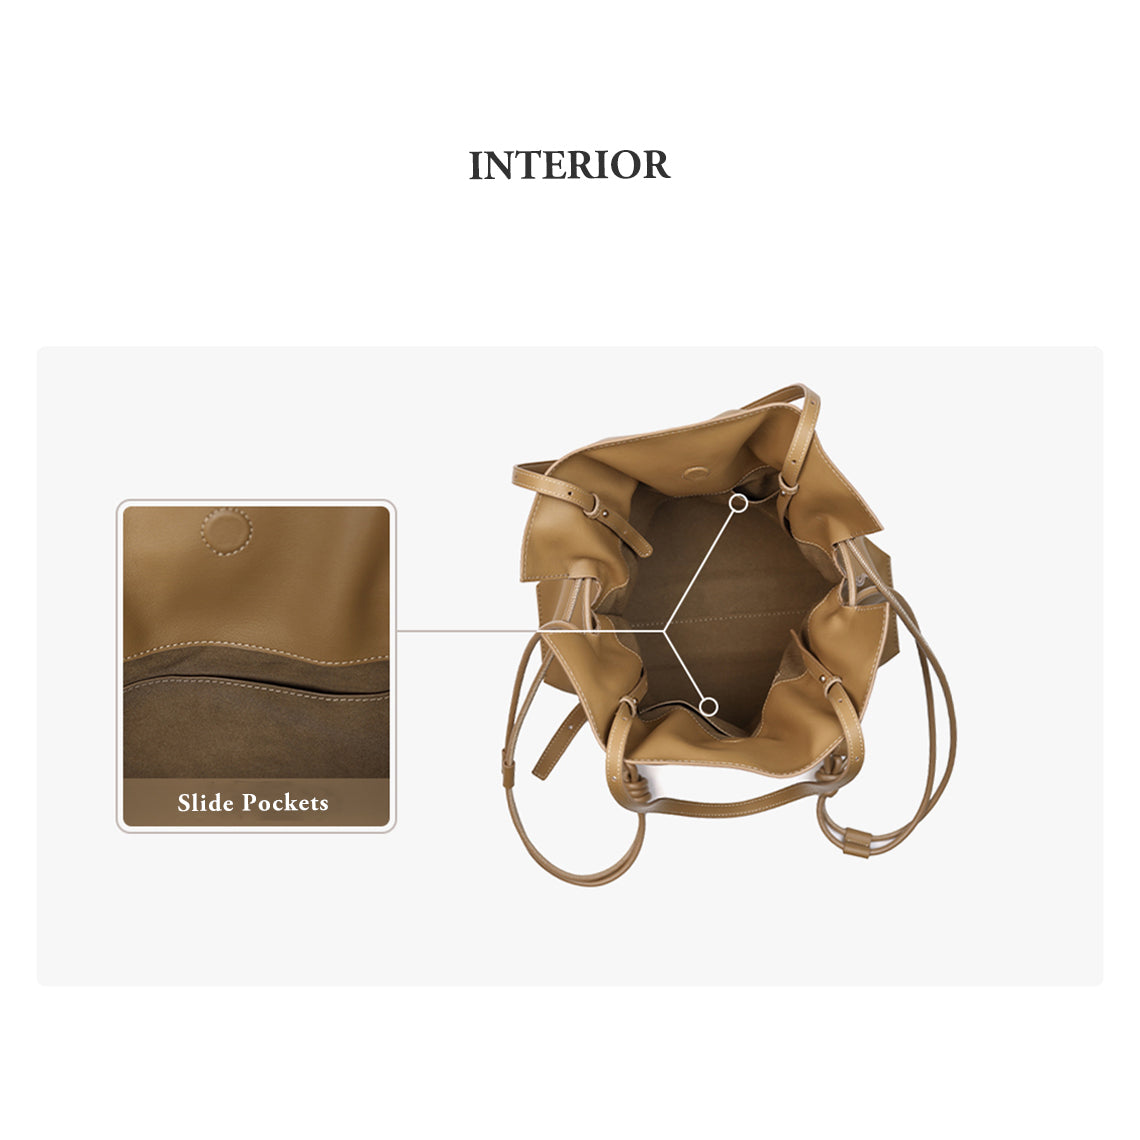 DIY Leather Drawstring Bag Interior